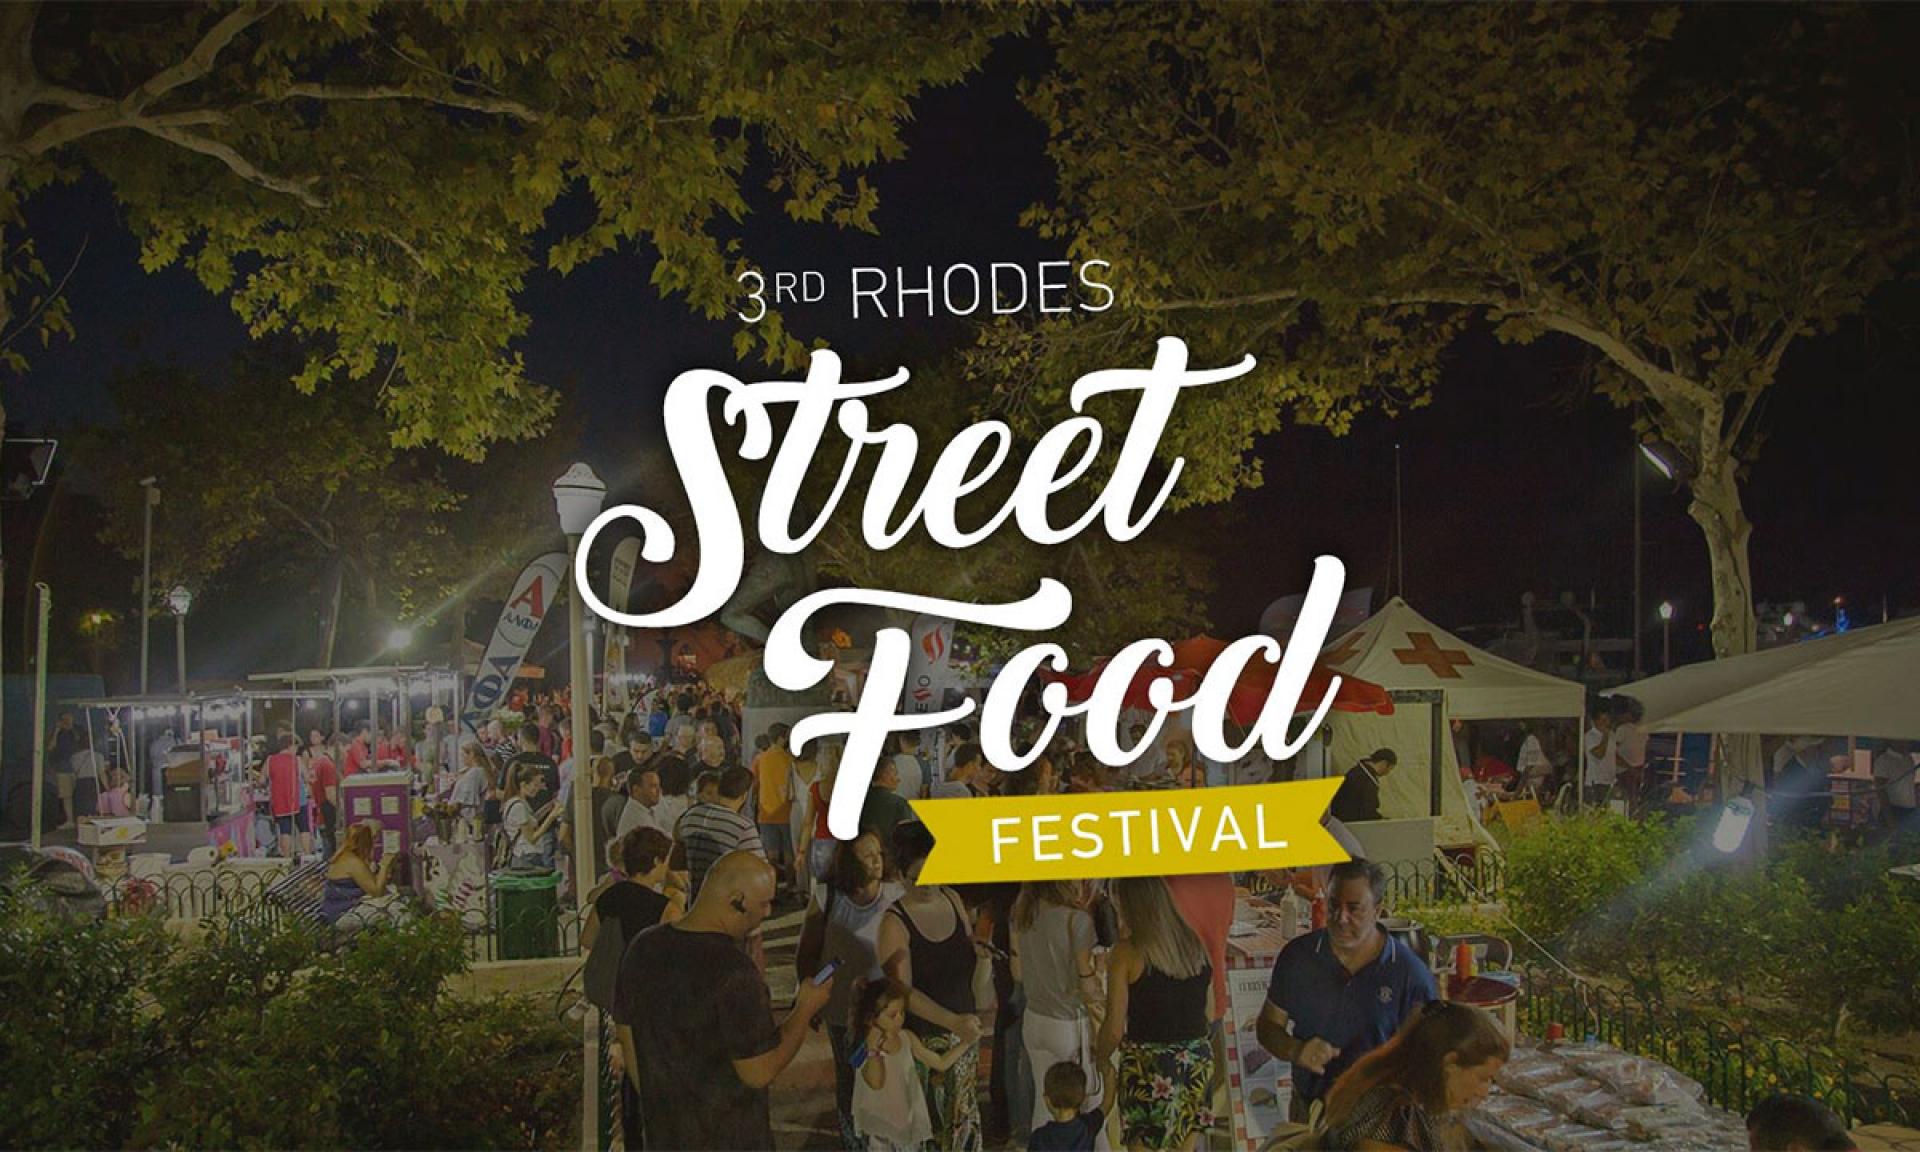 31/08 - 02/09: 3rd Rhodes Street Food Festival